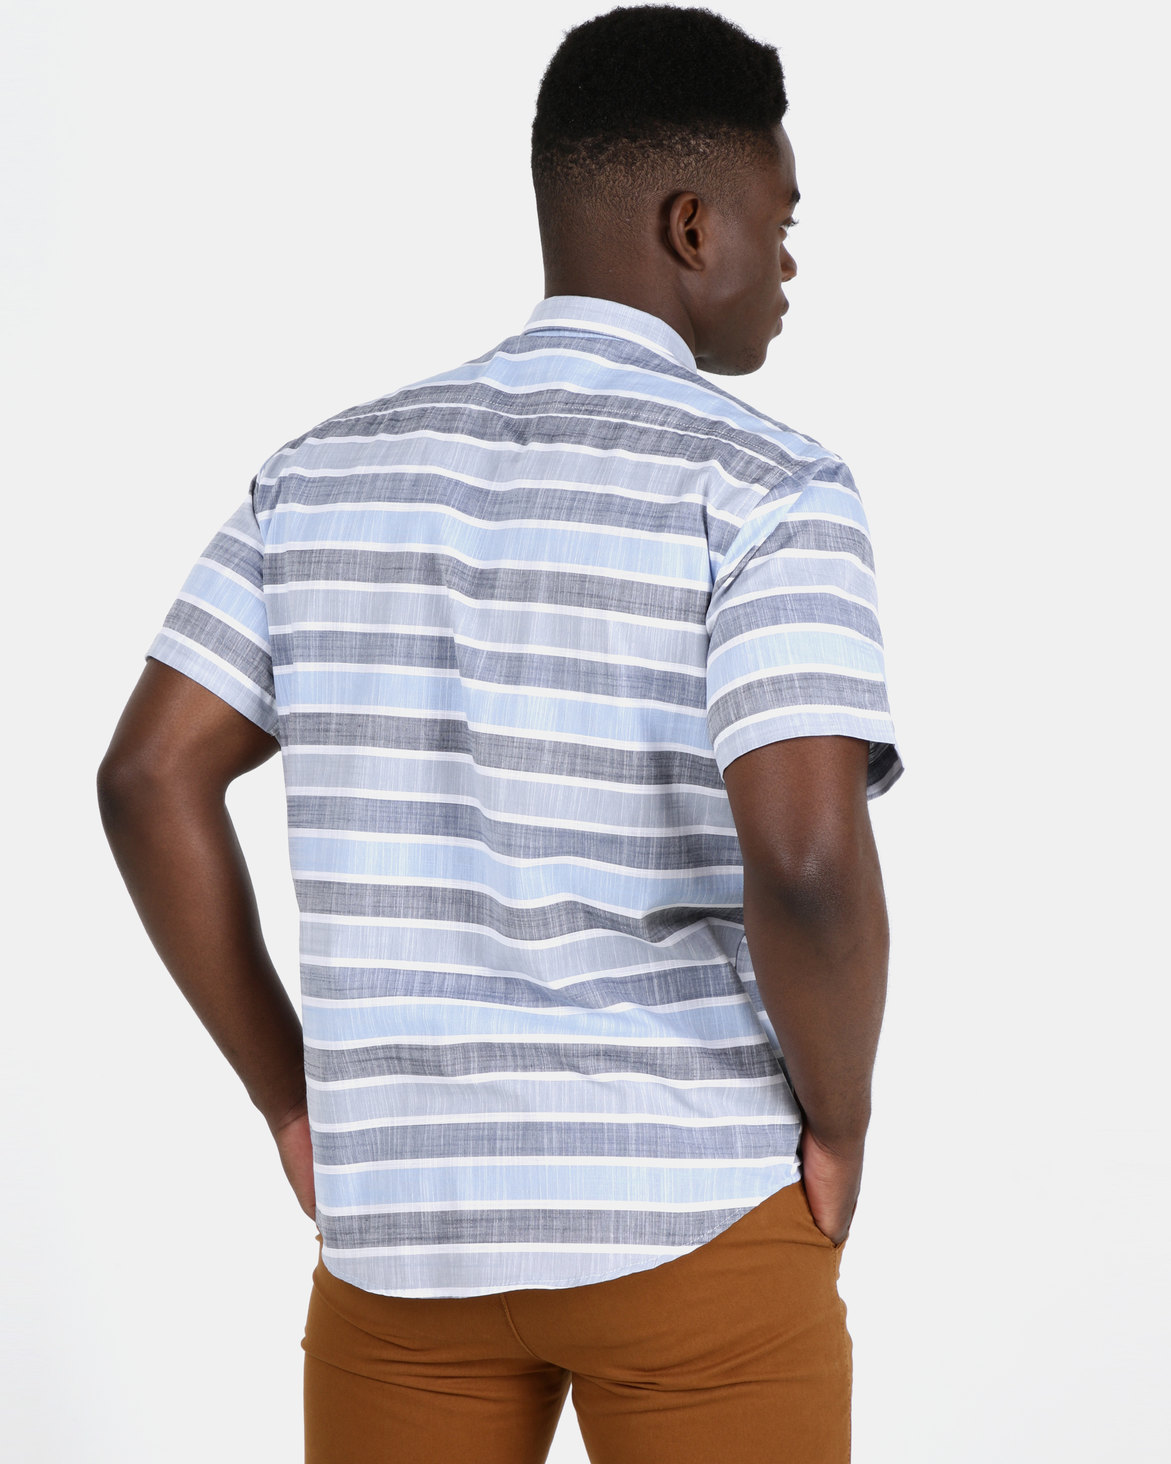 JCrew Blue Multi horizontal Stripe Shirt | Zando